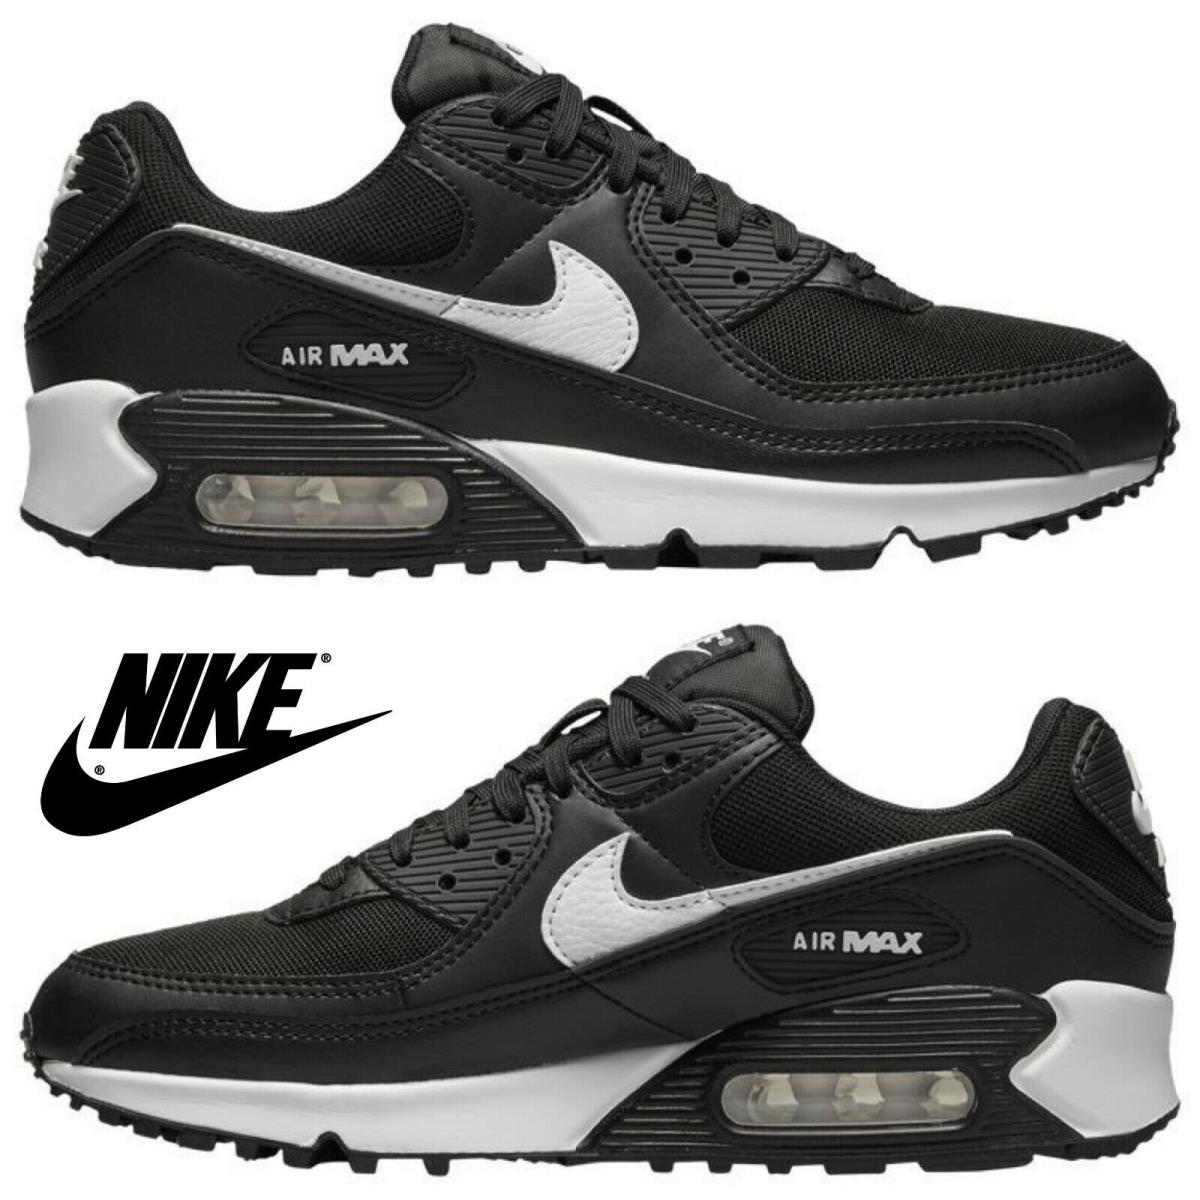 Nike Air Max 90 Women s Sneakers Casual Shoes Premium Running Sport Gym Black - Black, Manufacturer: Black/White